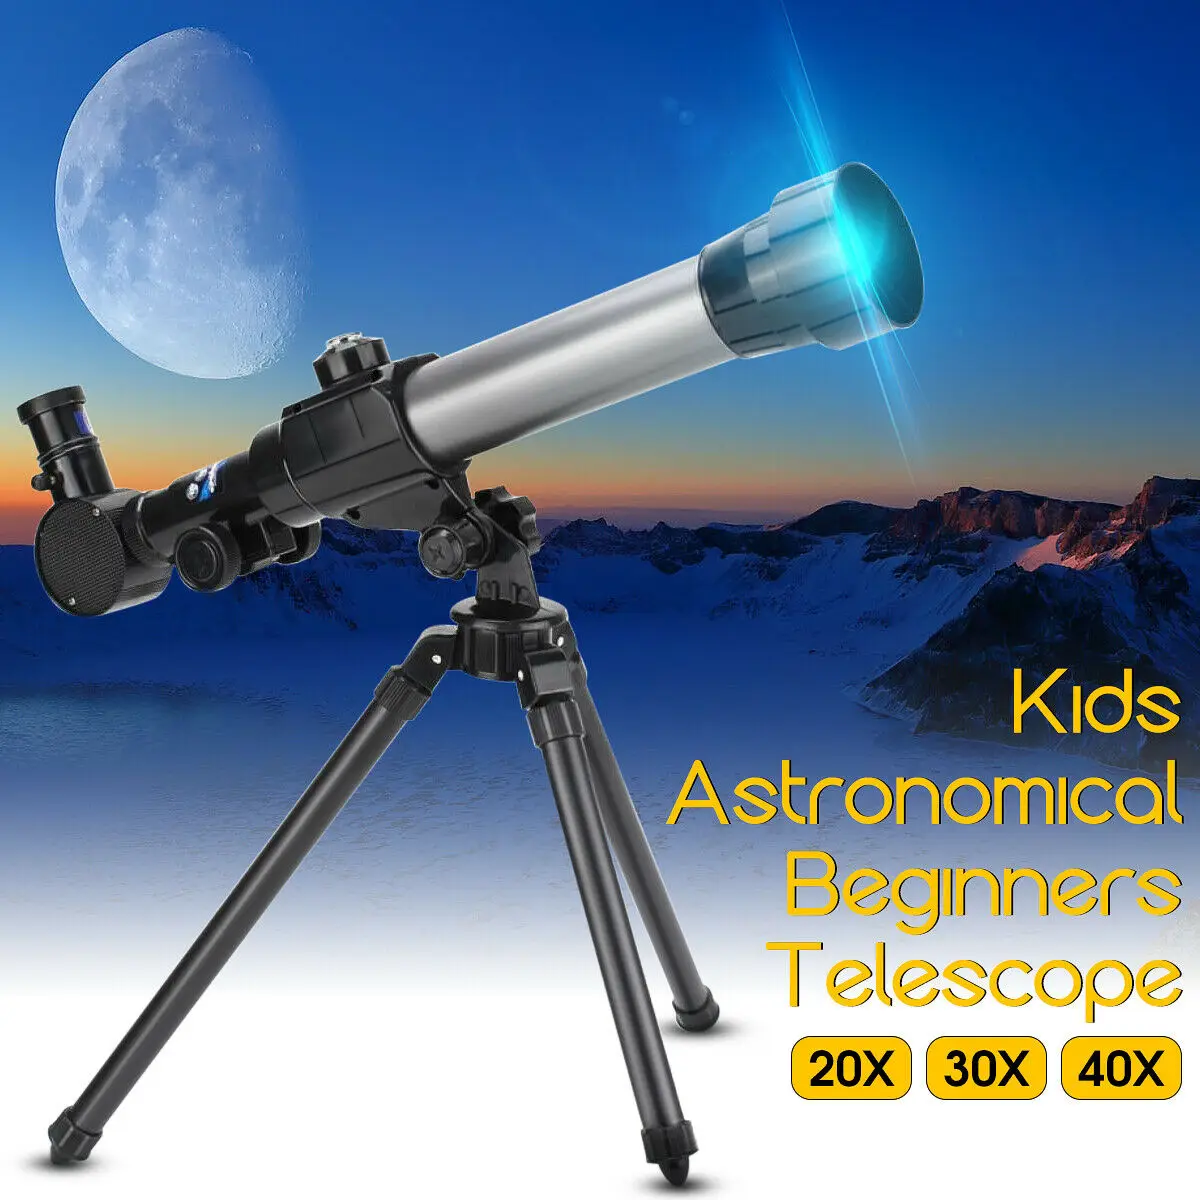 

20X 30X 40X Refraction Professional Astronomical Telescope With Portable Tripod Sky Monocular Telescopio Multiple Eyepiece Scope